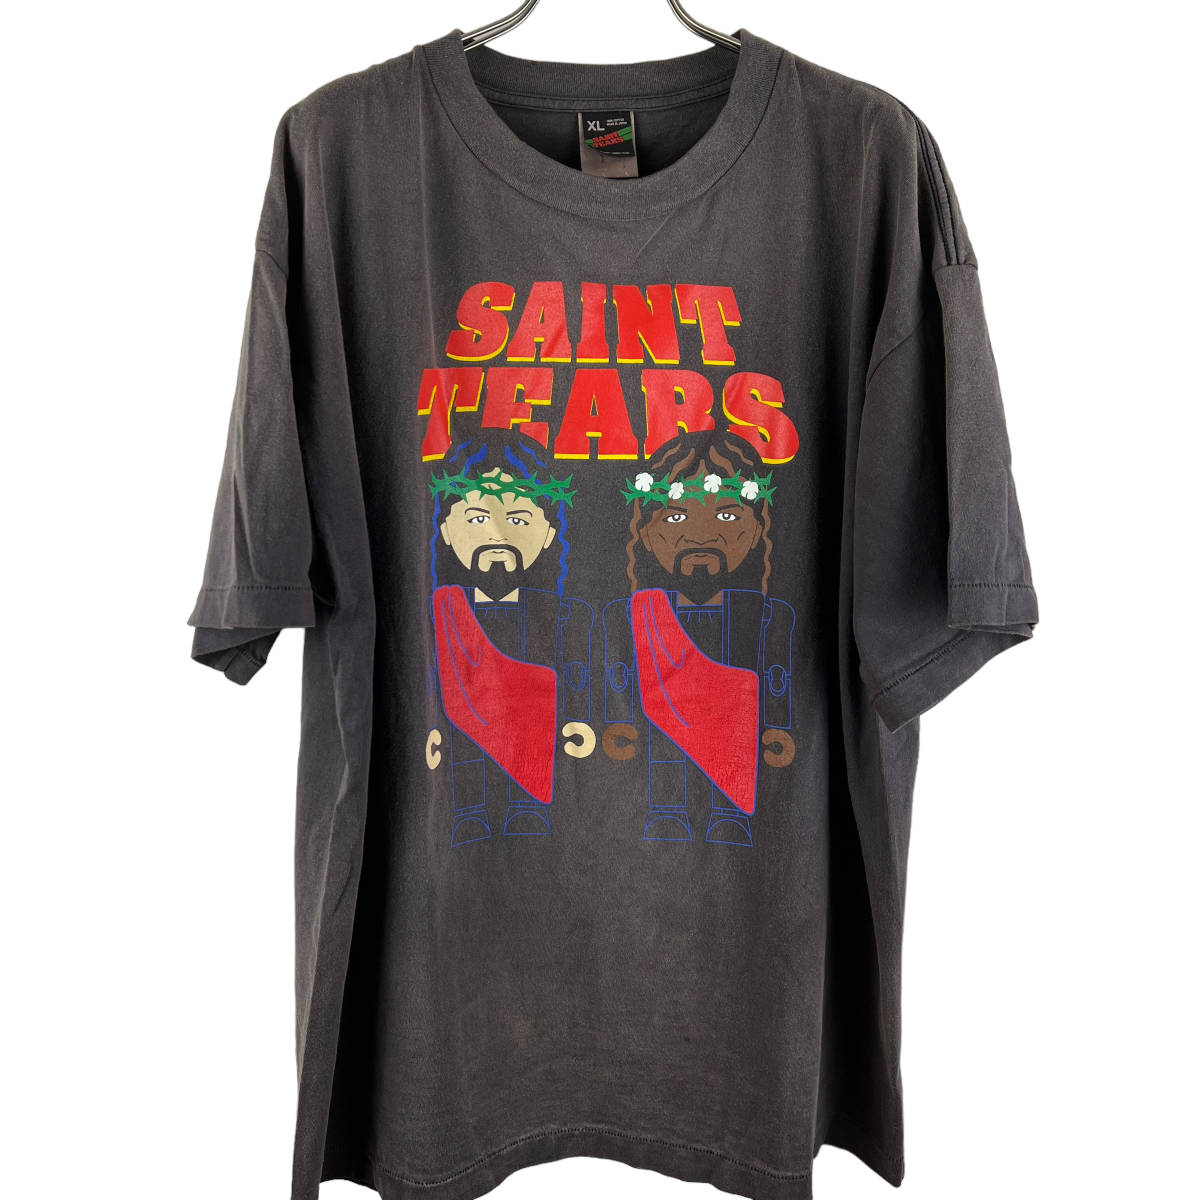 Saint Michael(セントマイケル) x Denim Tears(デニムティアーズ) Vintage Work Tribe Print T Shirt (brown)